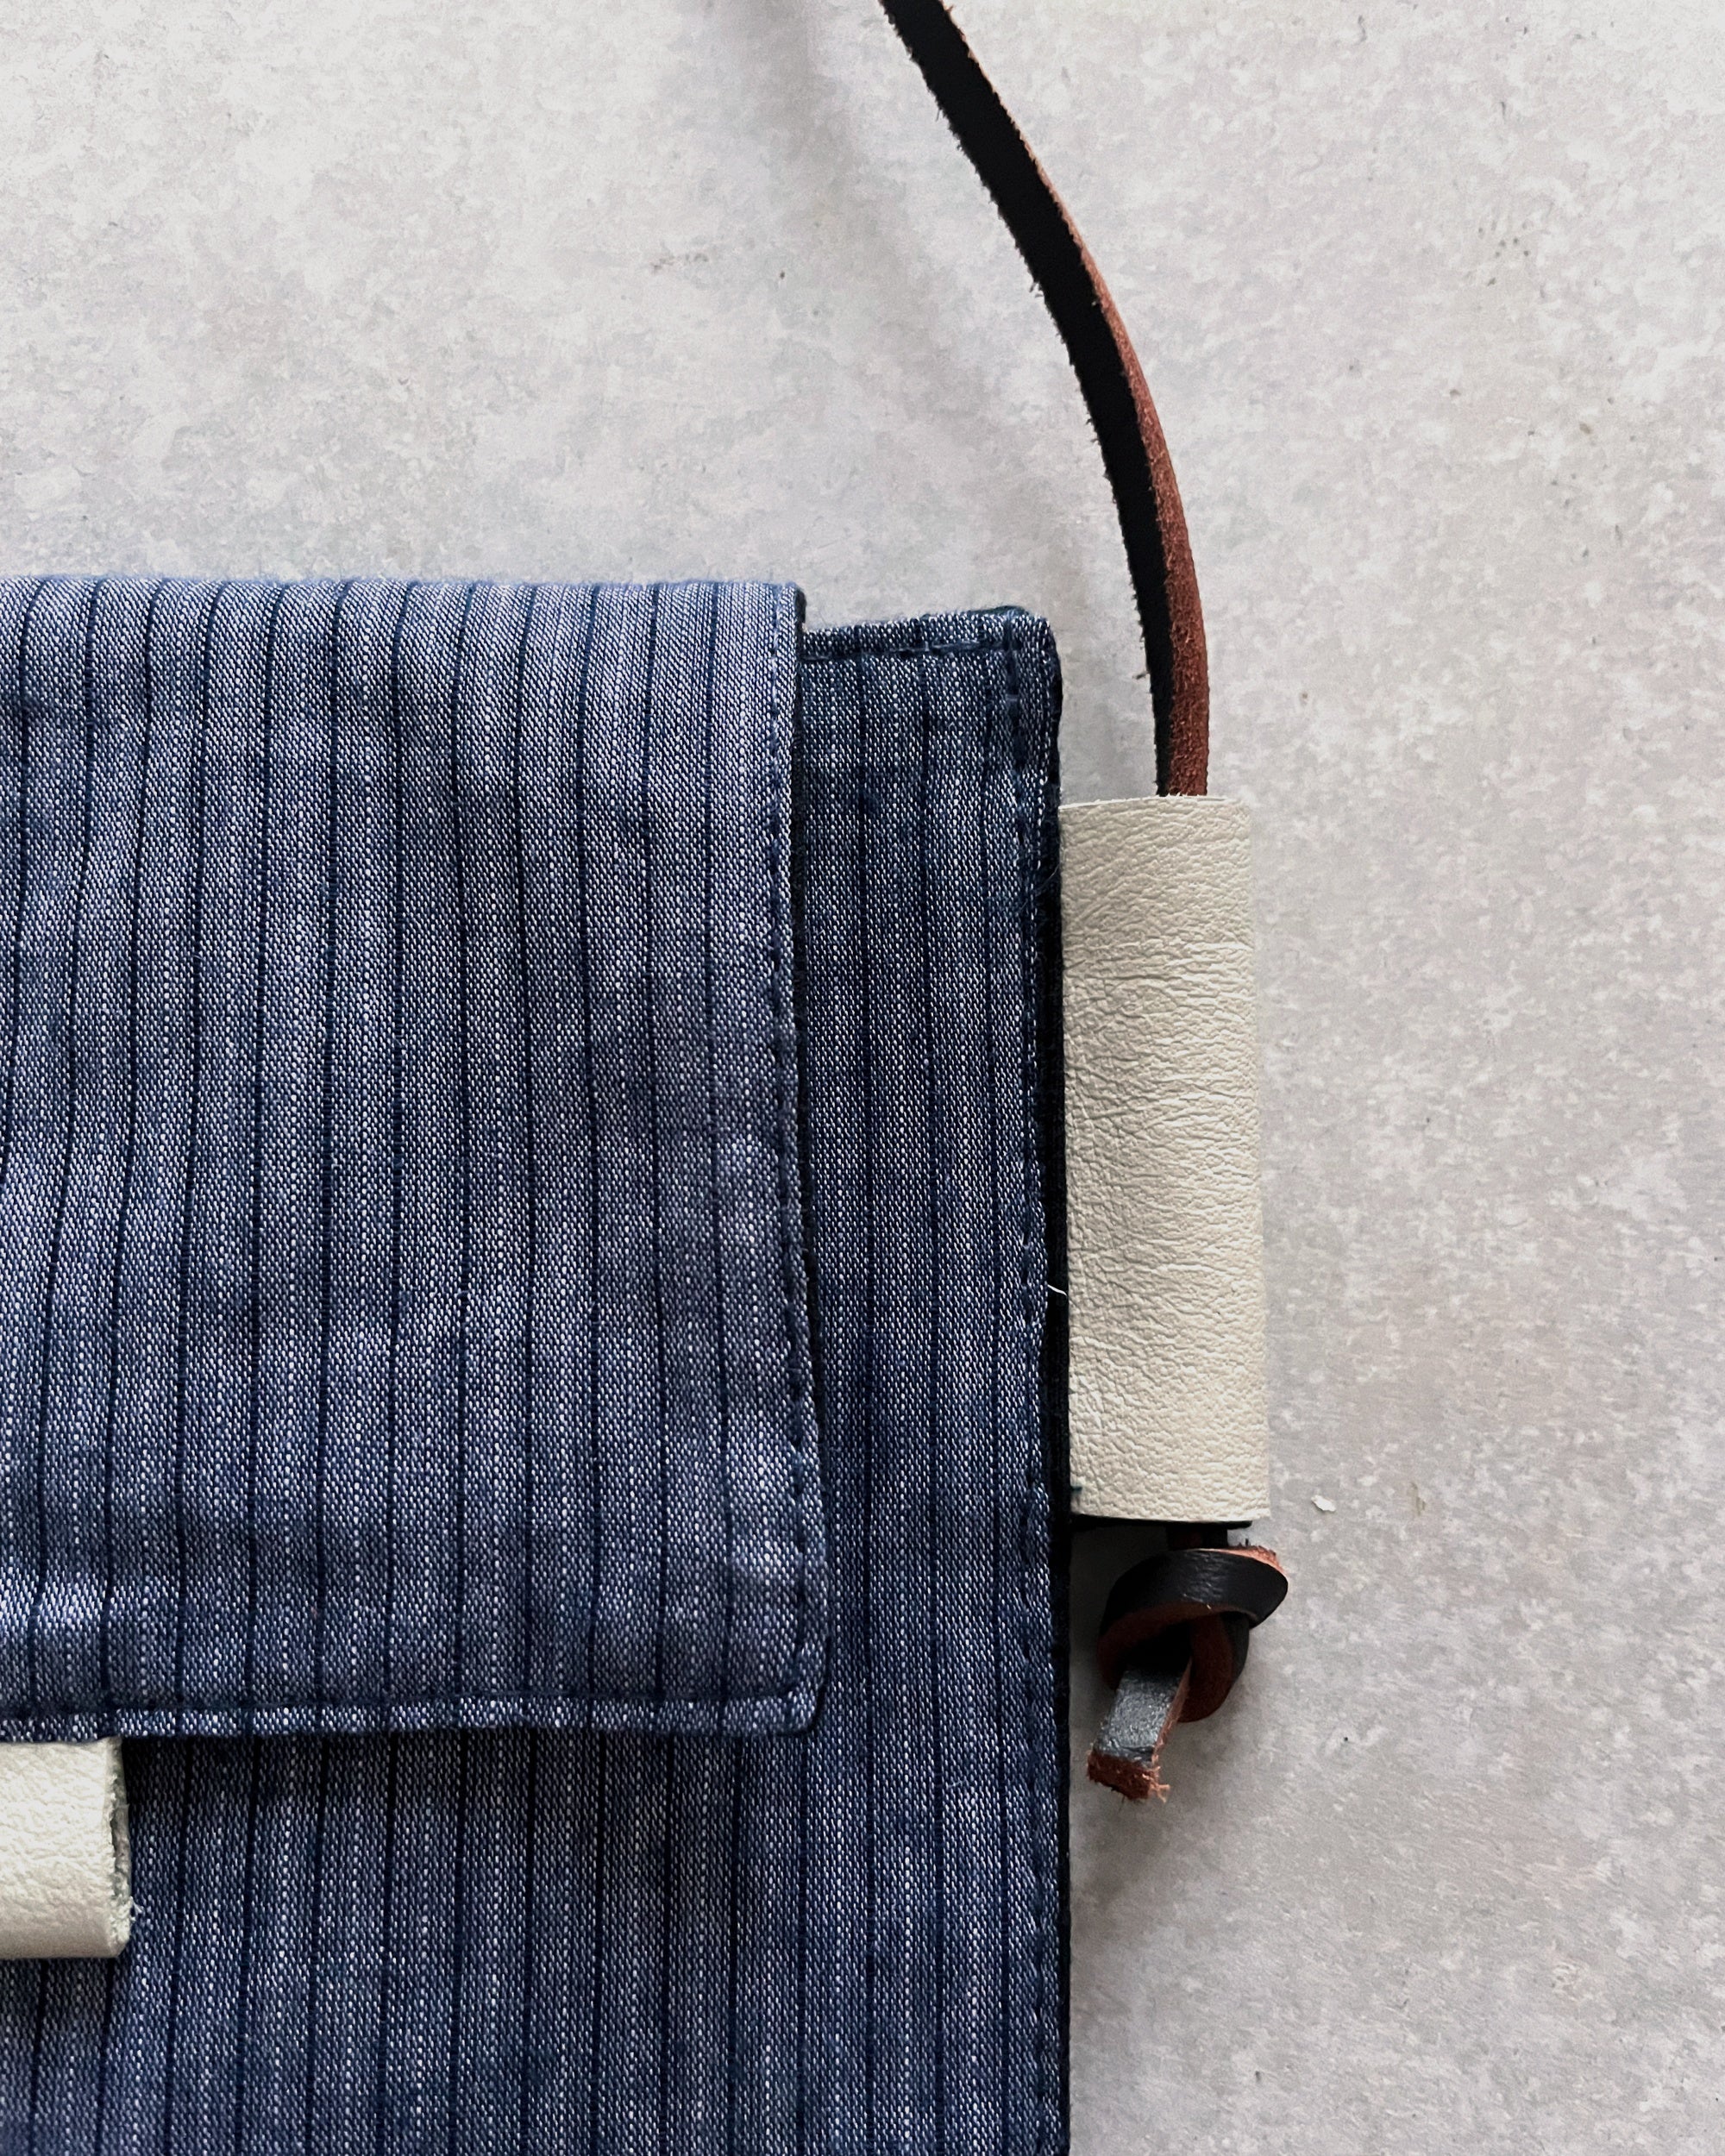 japanese inspired meiji pouch, handsewn for the maker hobart